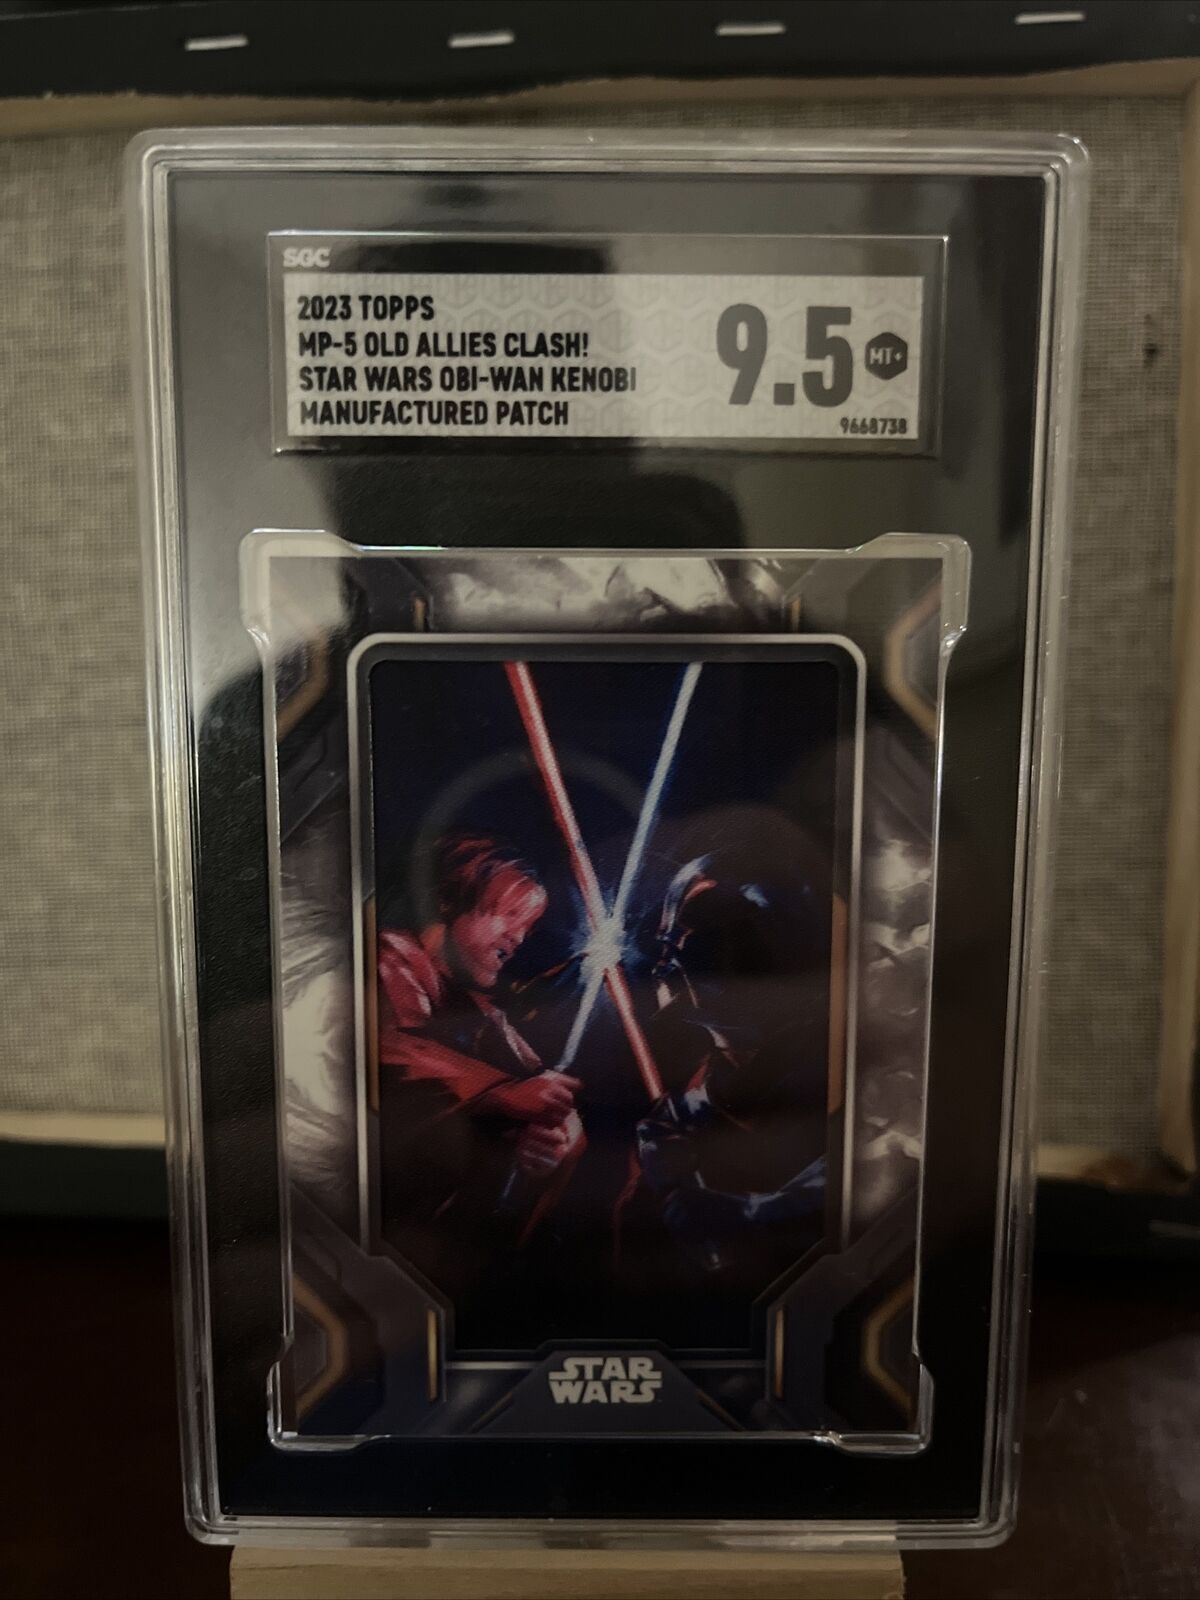 2023 Topps Star Wars Obi-wan Kenobi MP-5 Old Allies Clash Patch Card SGC 9.5